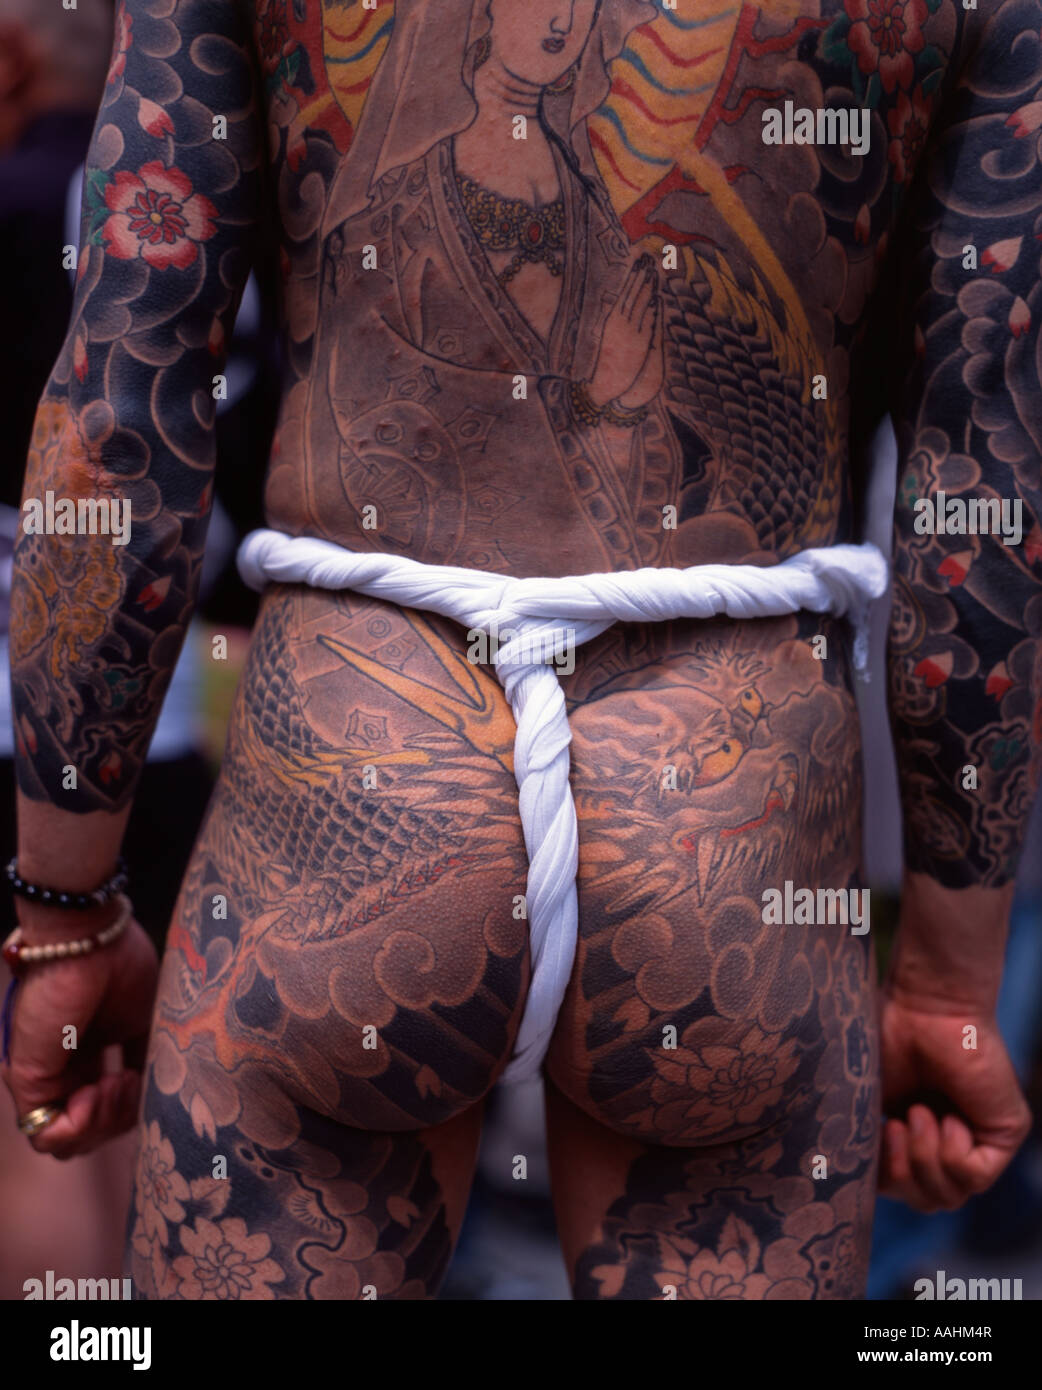 Tattoos on the back of man at Tokyo's Sanja Matsuri held at Senso-ji Temple ( Asakusa Kannon ) Stock Photo